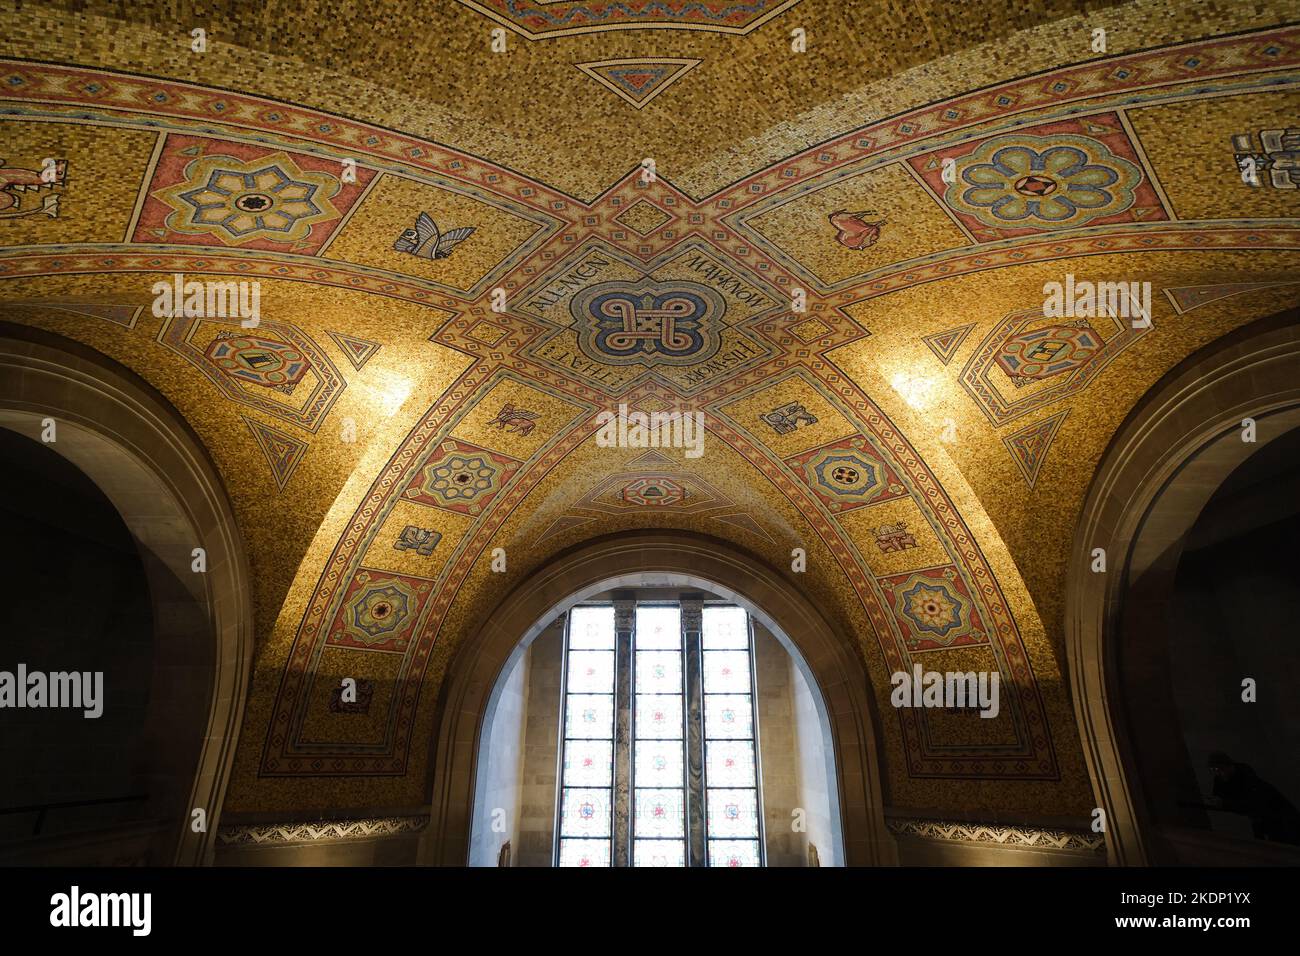 Mosaic dome ceiling inside the Royal Ontario Musum in Toronto, Ontario, Canada Stock Photo